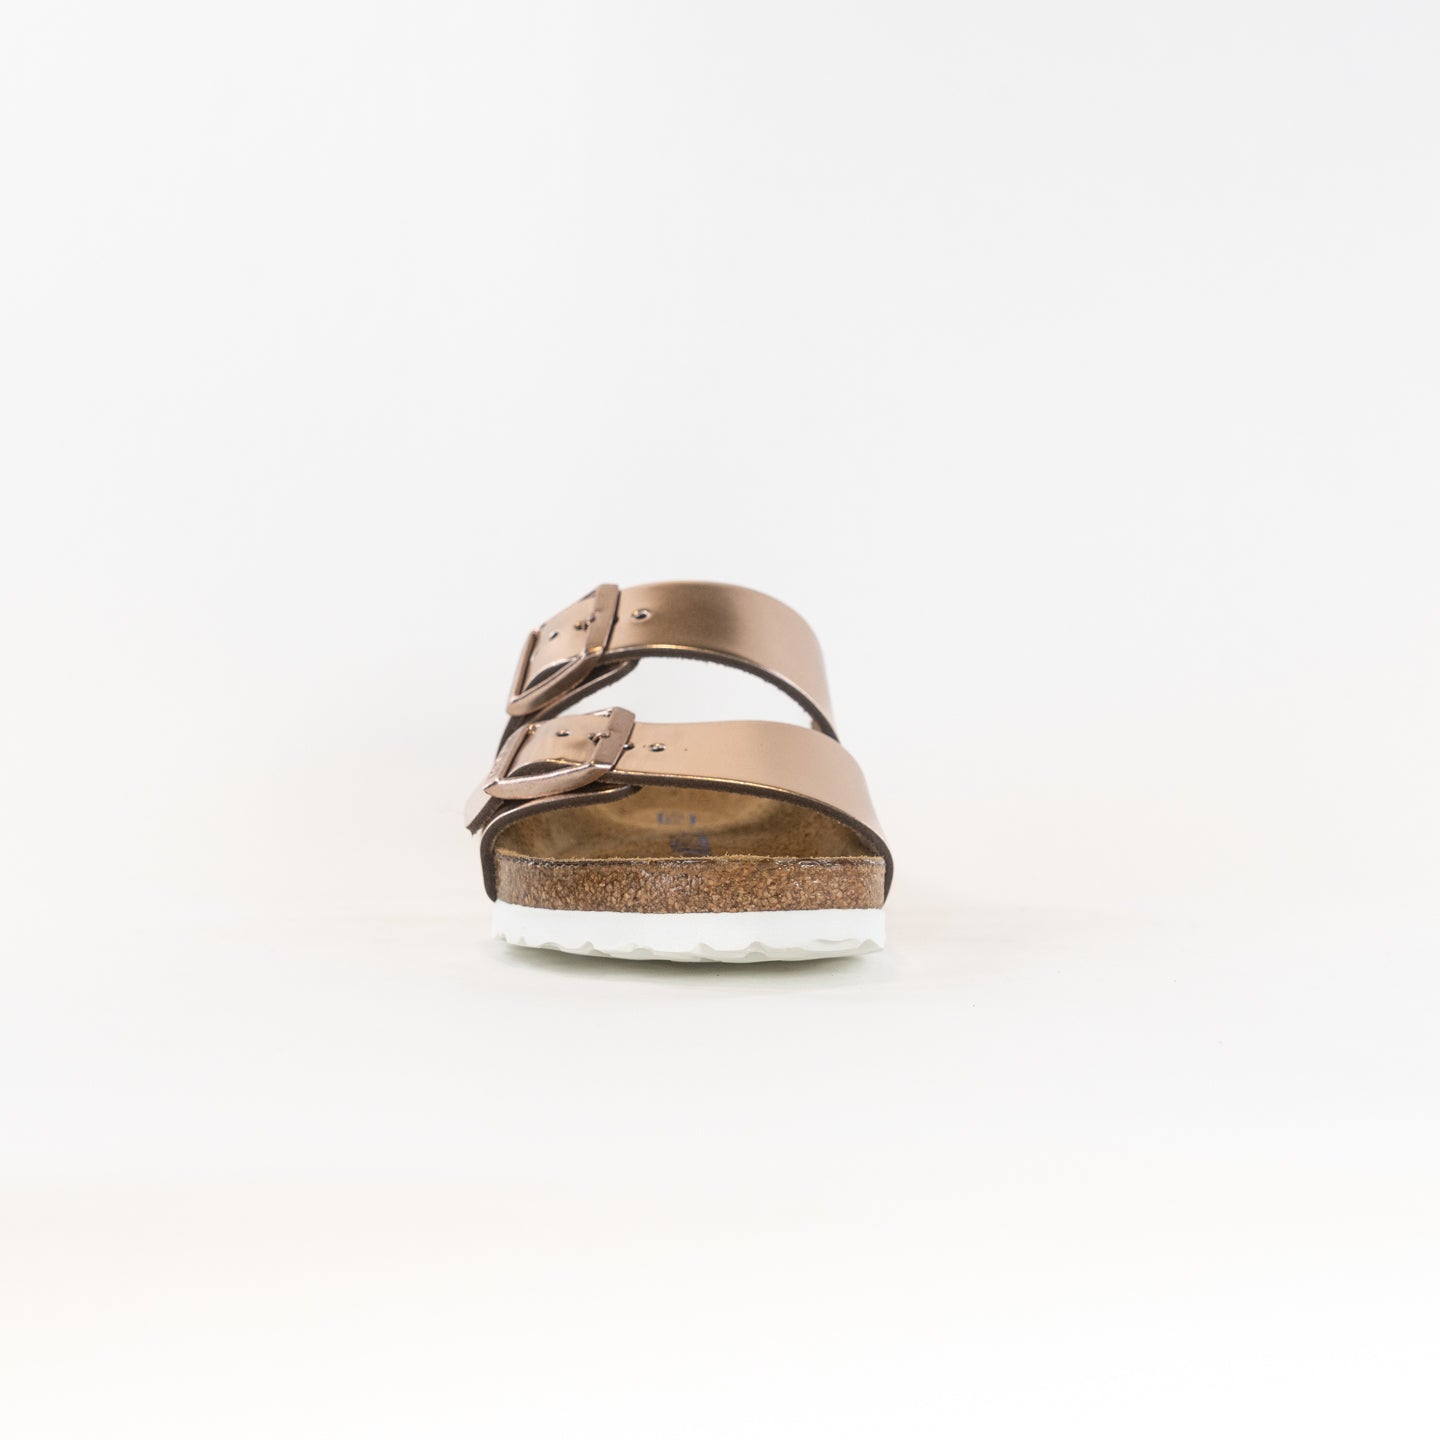 Birkenstock Arizona Soft Footbed (Women's) - Copper Leather